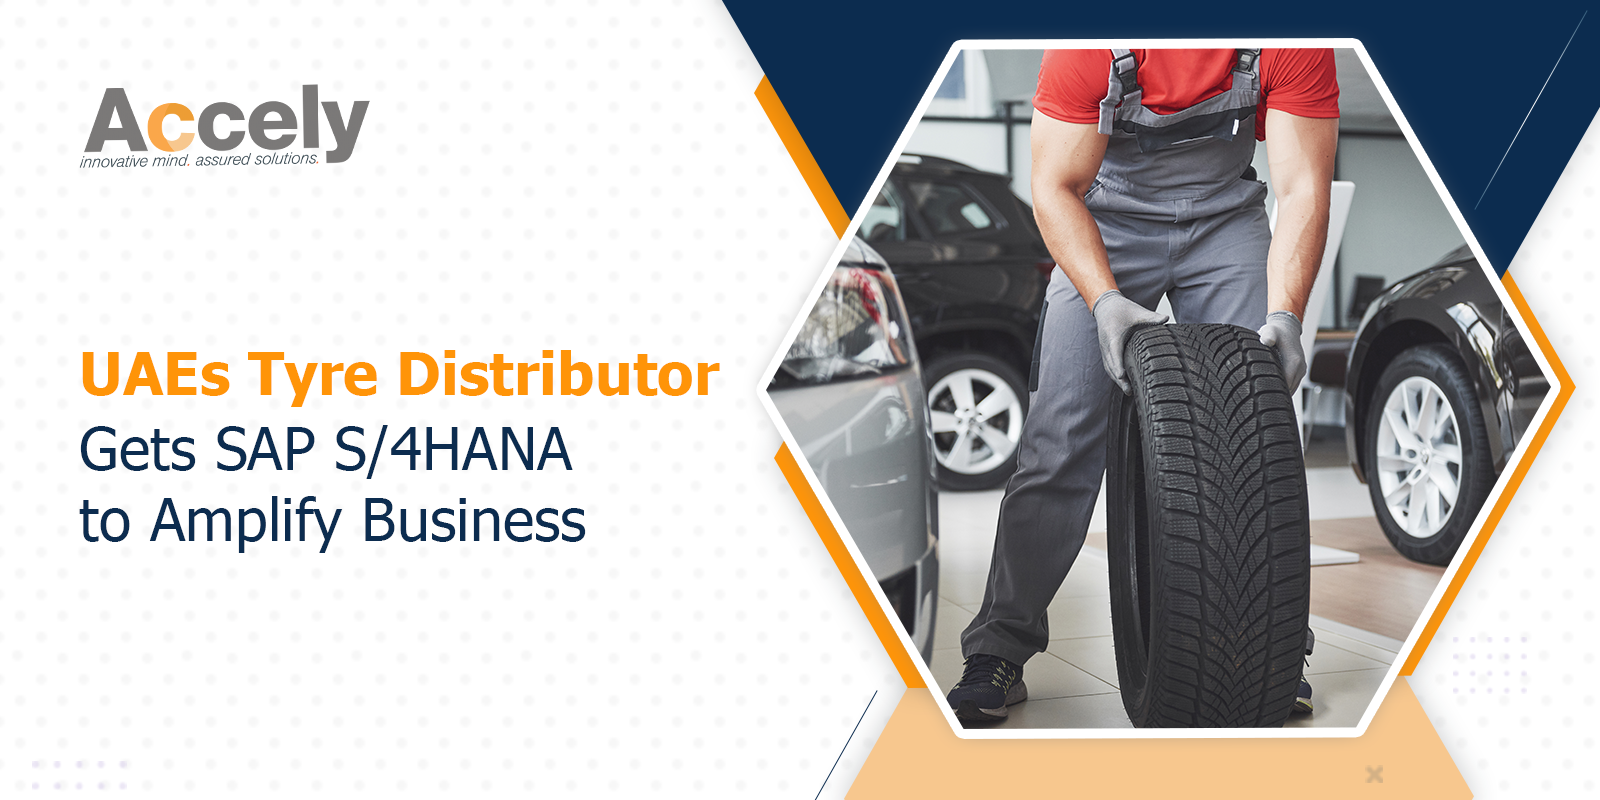 UAEs Tyre Distributor gets SAP S/4HANA to amplify business